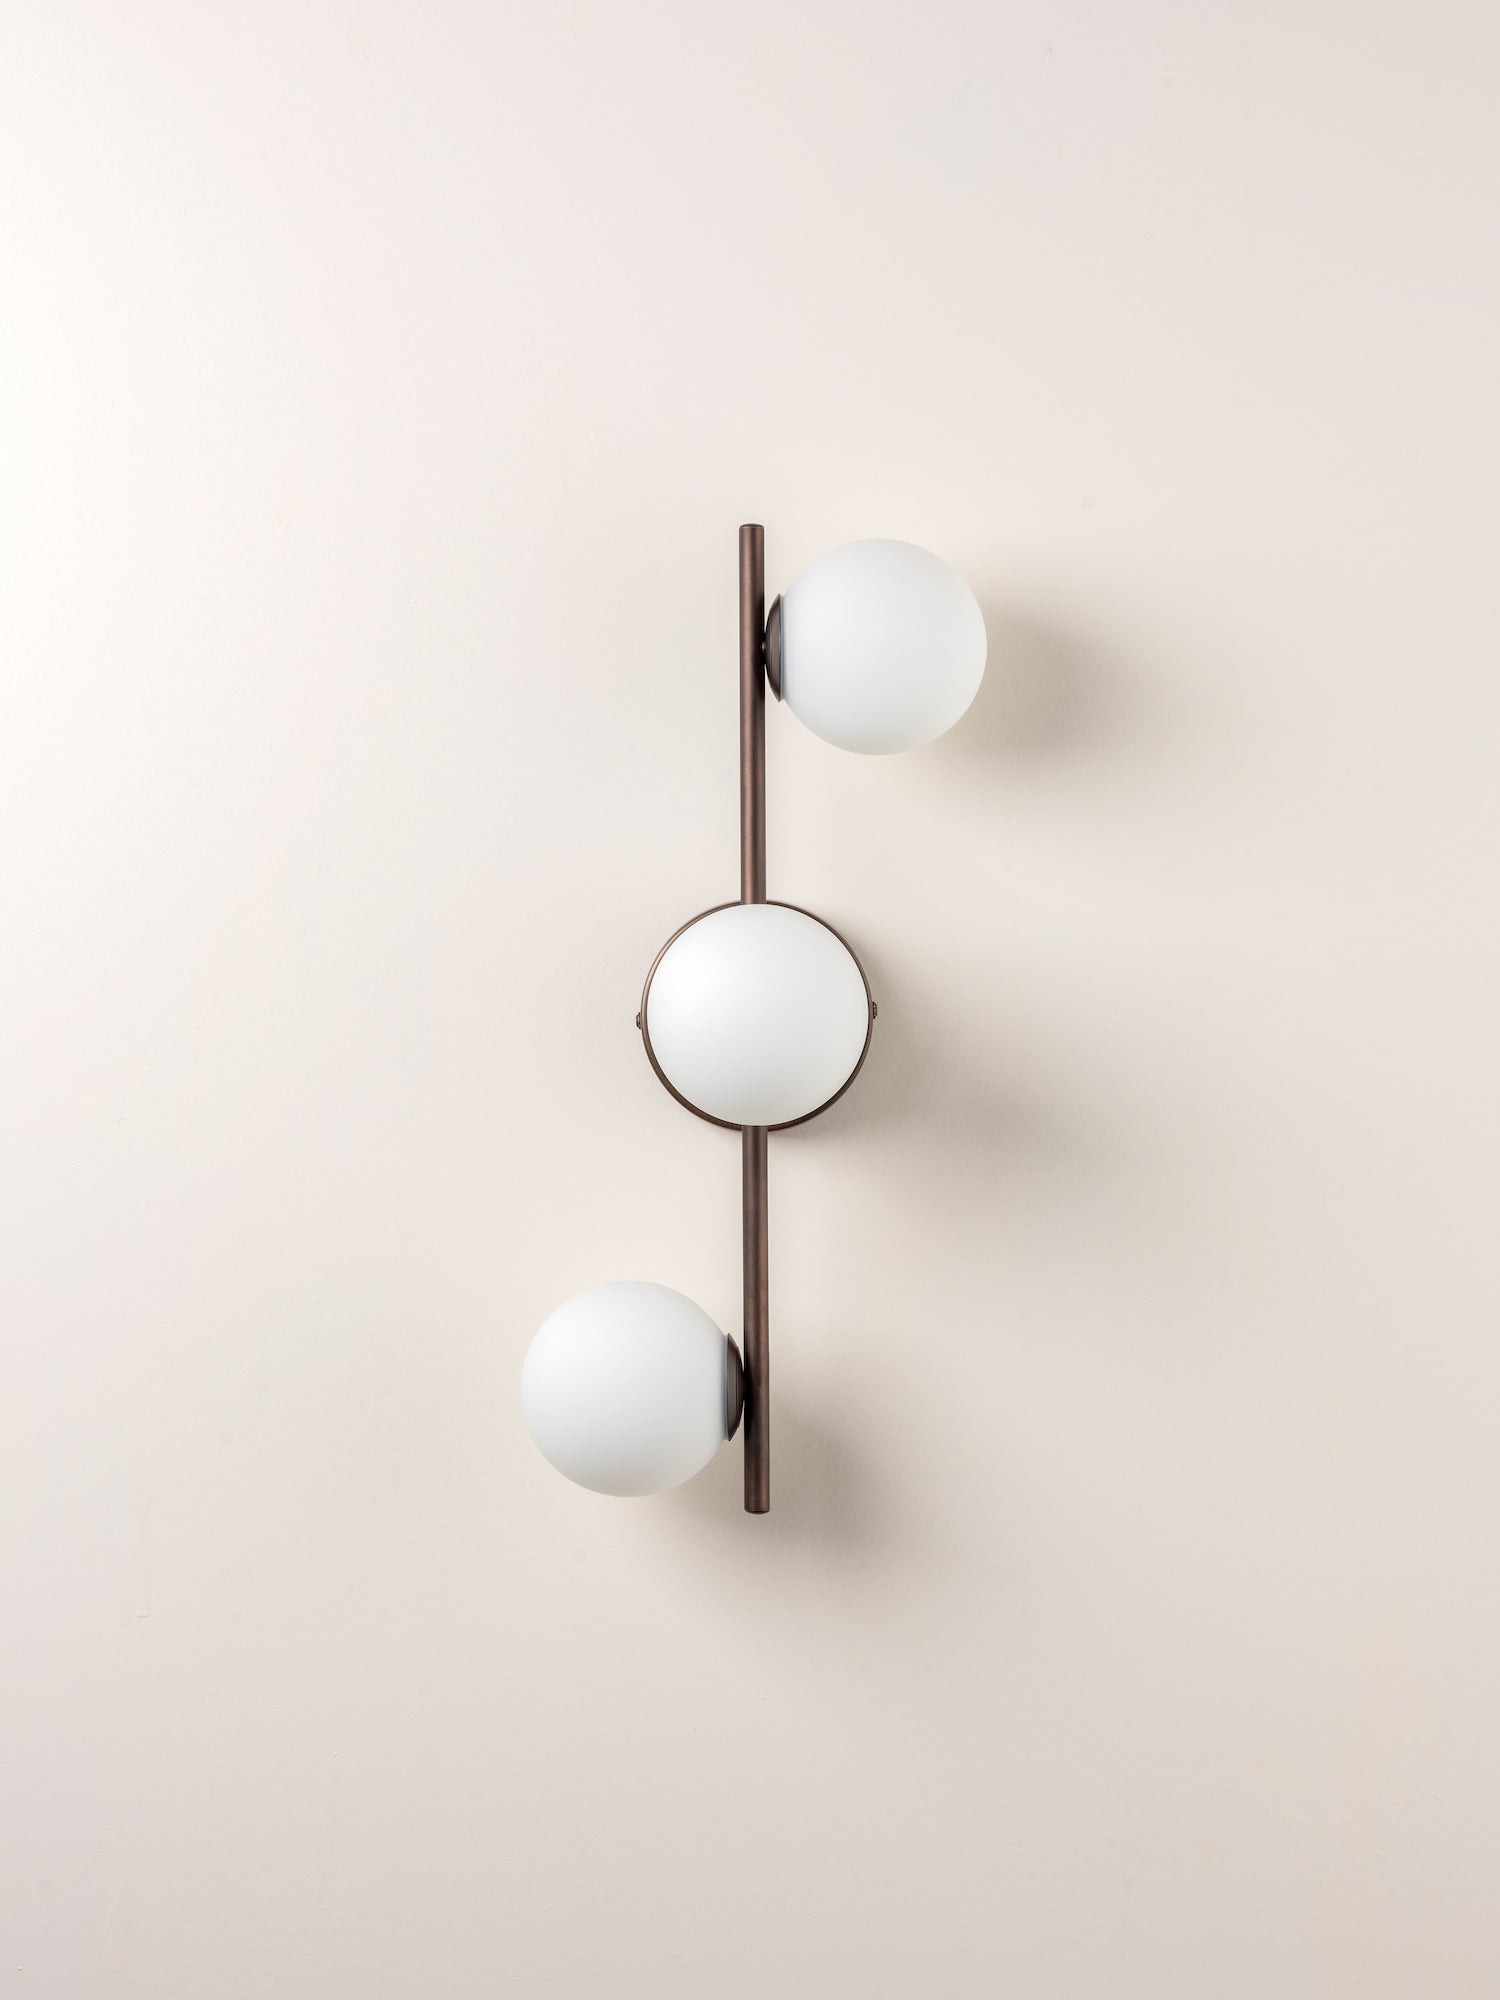 Coro - 3 light bronze and opal ceiling / wall | Ceiling Light | Lights & Lamps | UK | Modern Affordable Designer Lighting